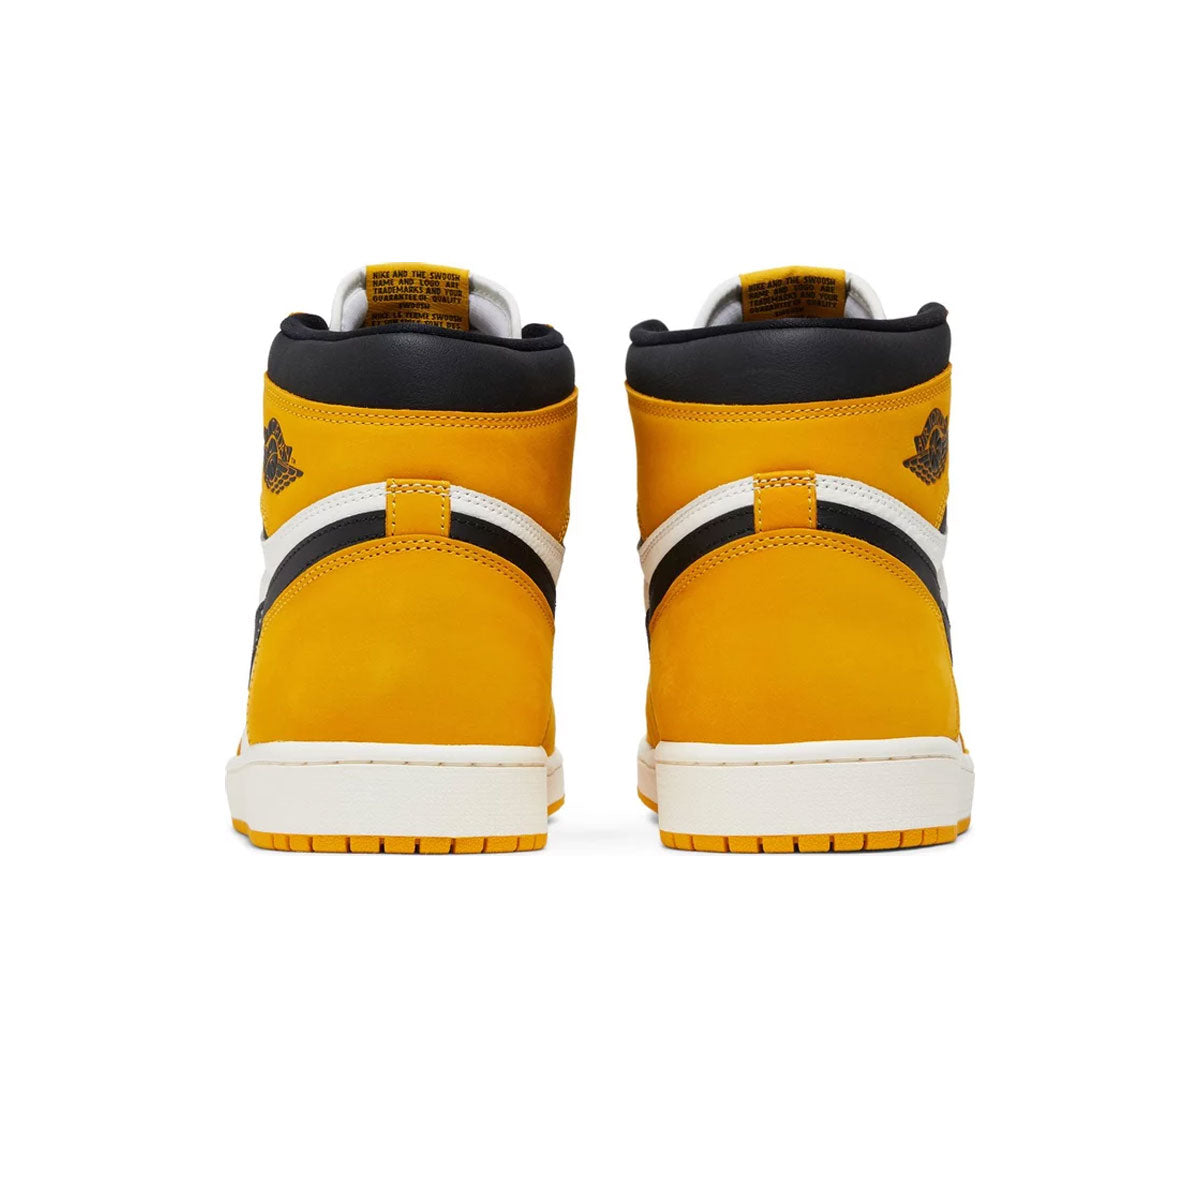 Air Jordan 1 Retro High OG “Yellow Ochre”